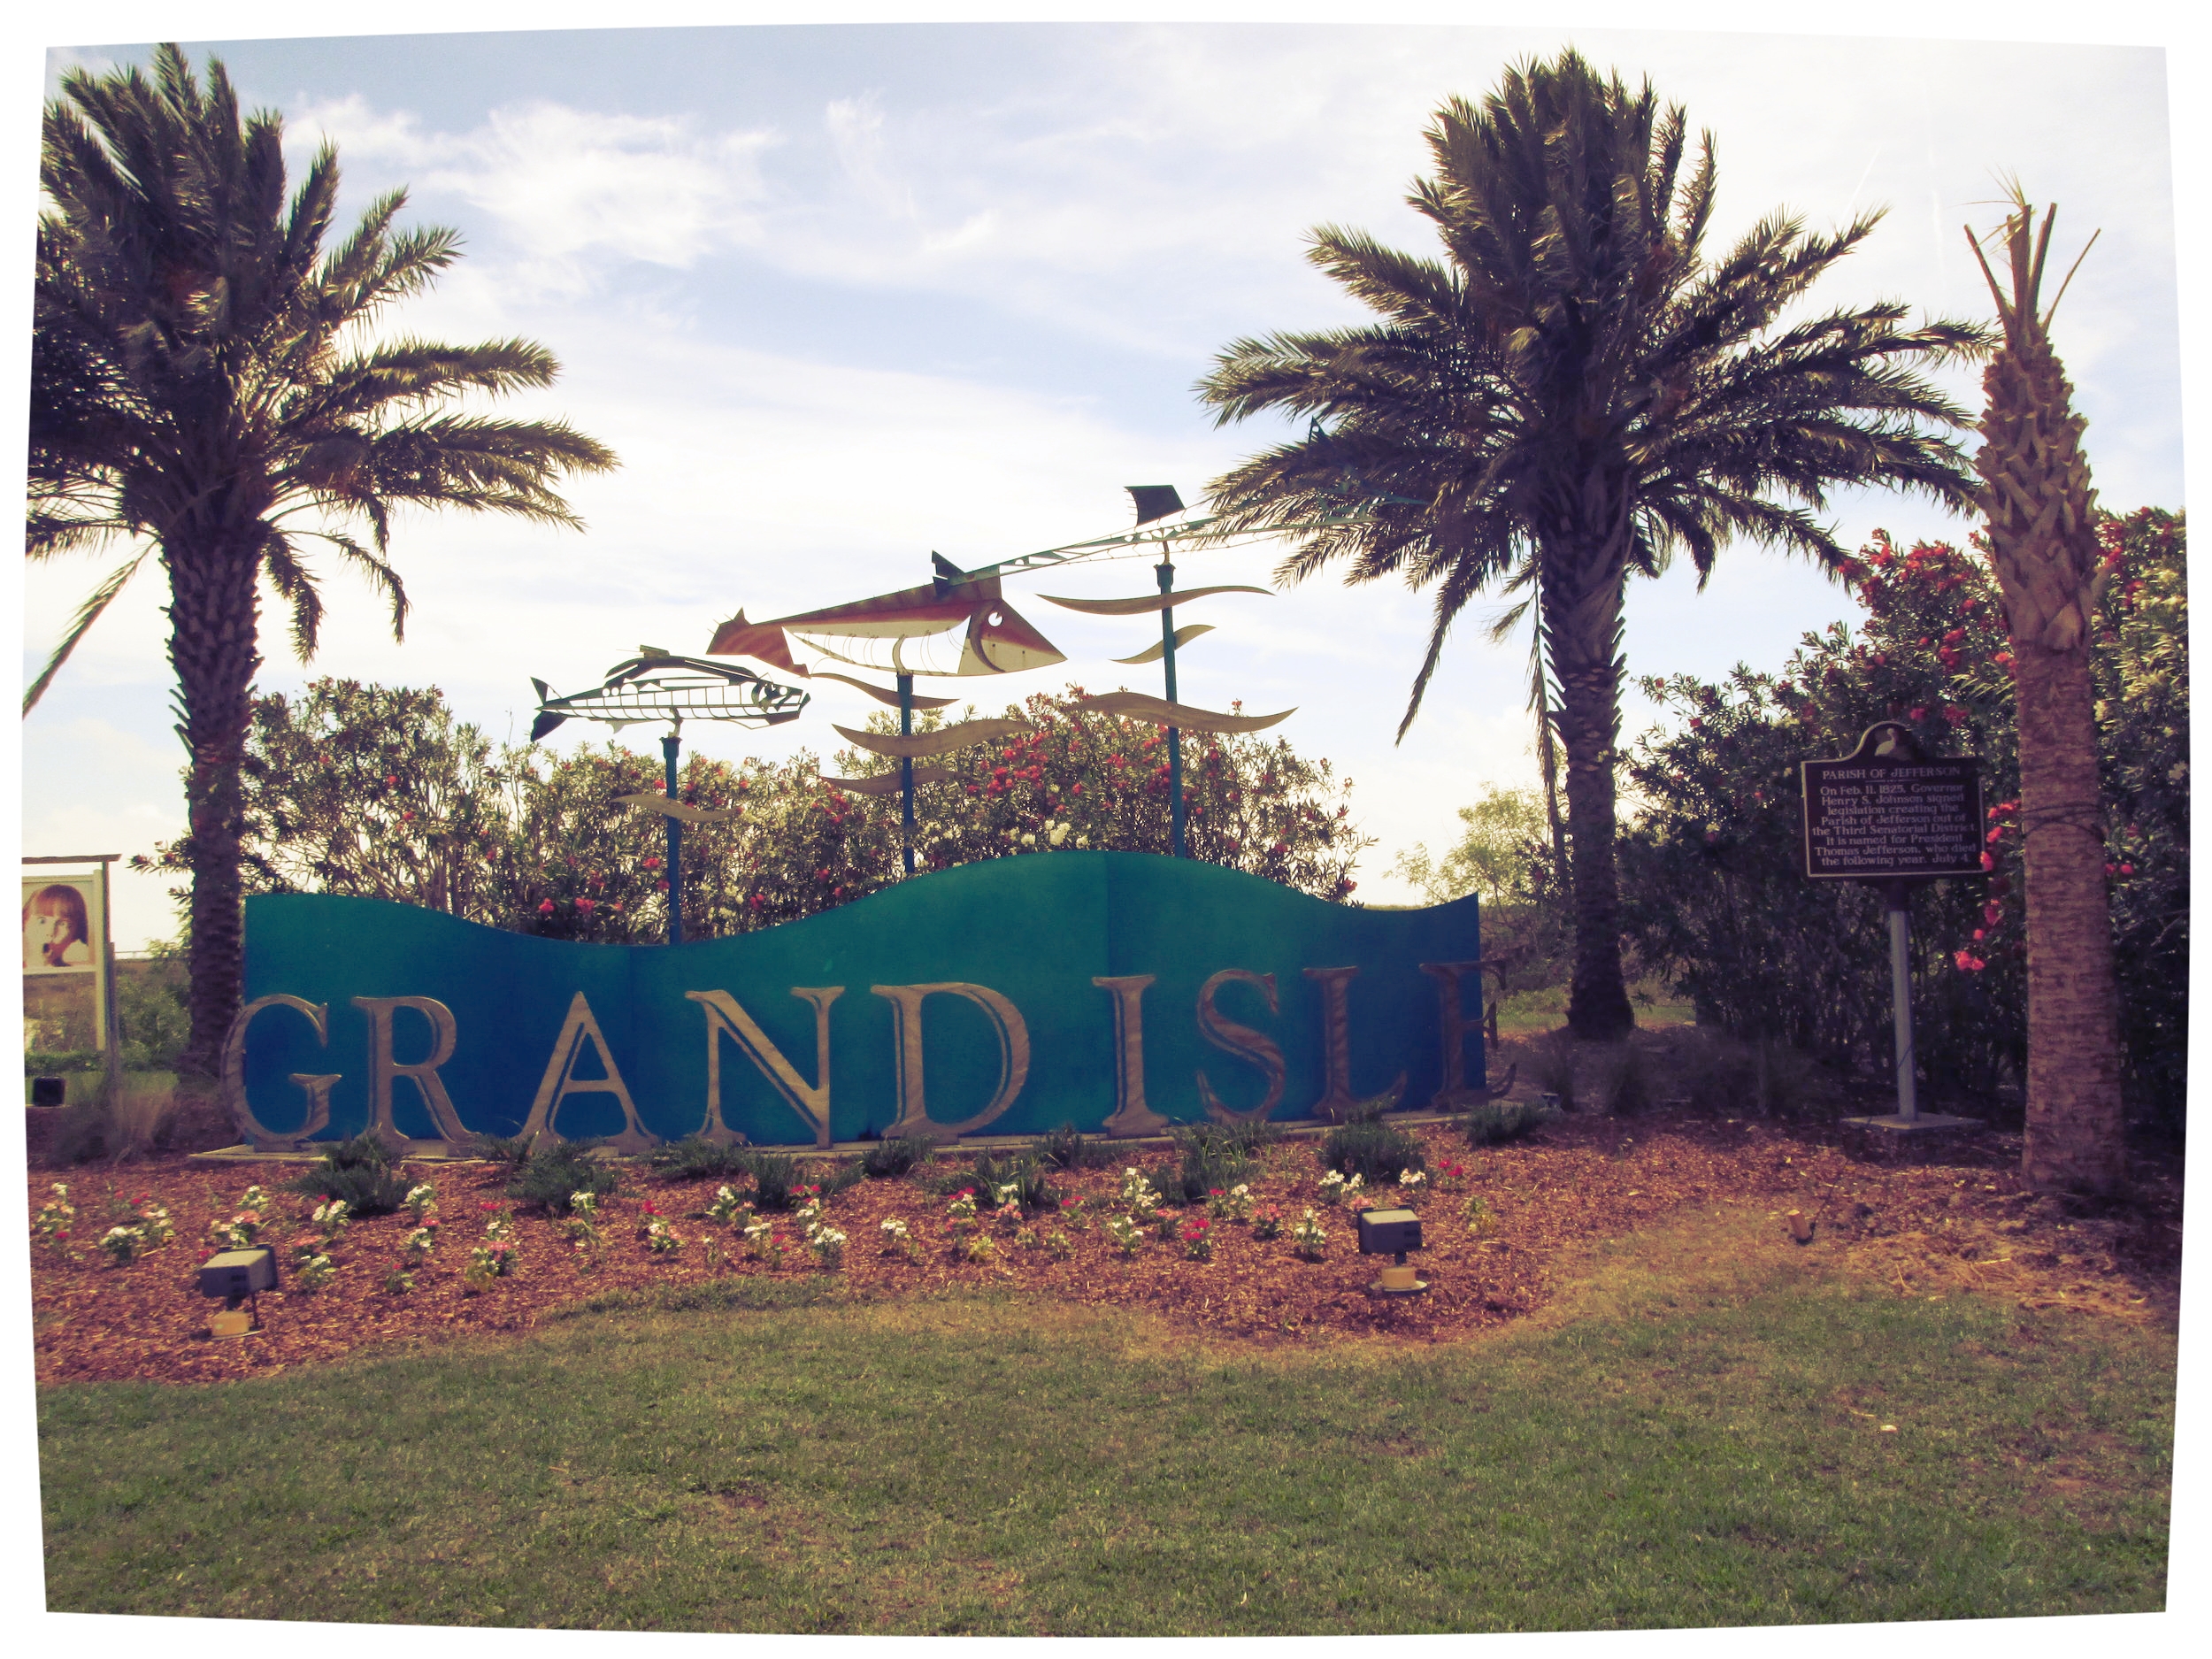 Welcome to Grand Isle!